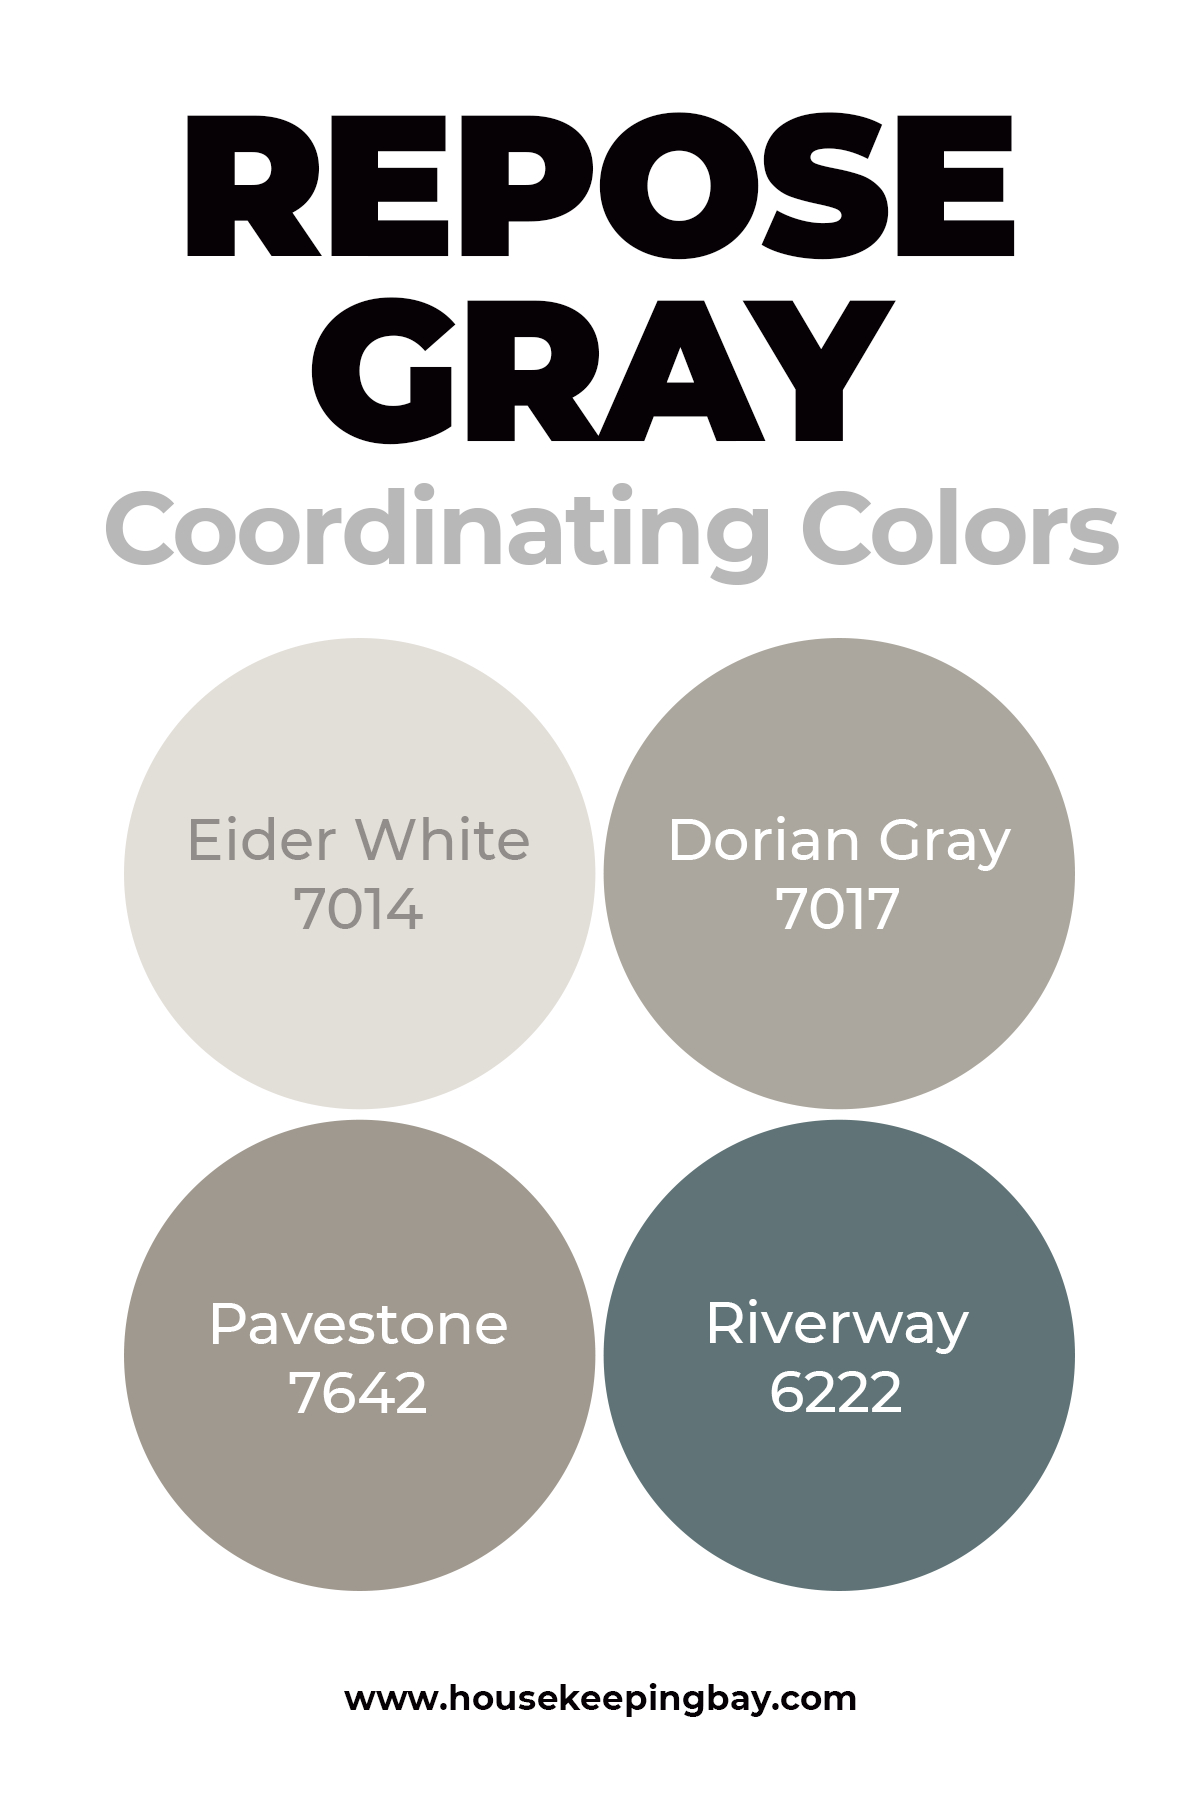 Repose Gray Coordinating Colors